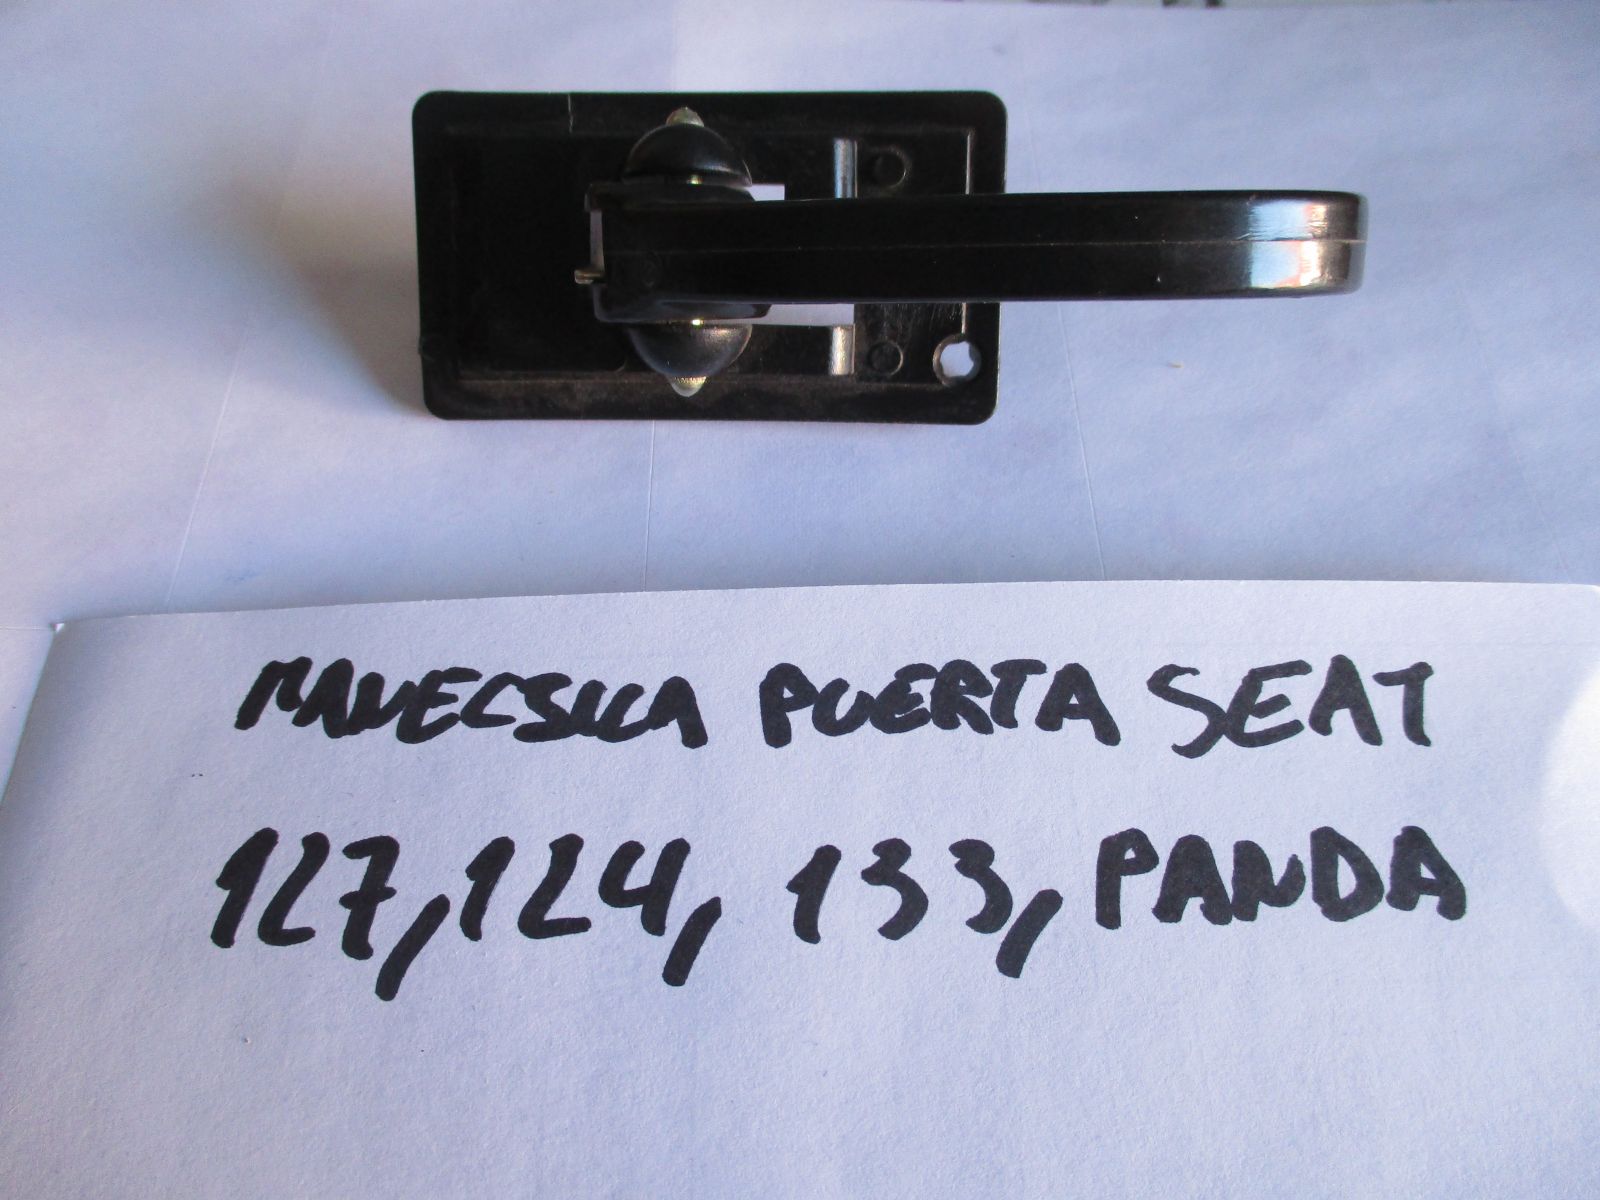 MANECILLA APERTURA INTERIOR SEAT 124 127 133 PANDA